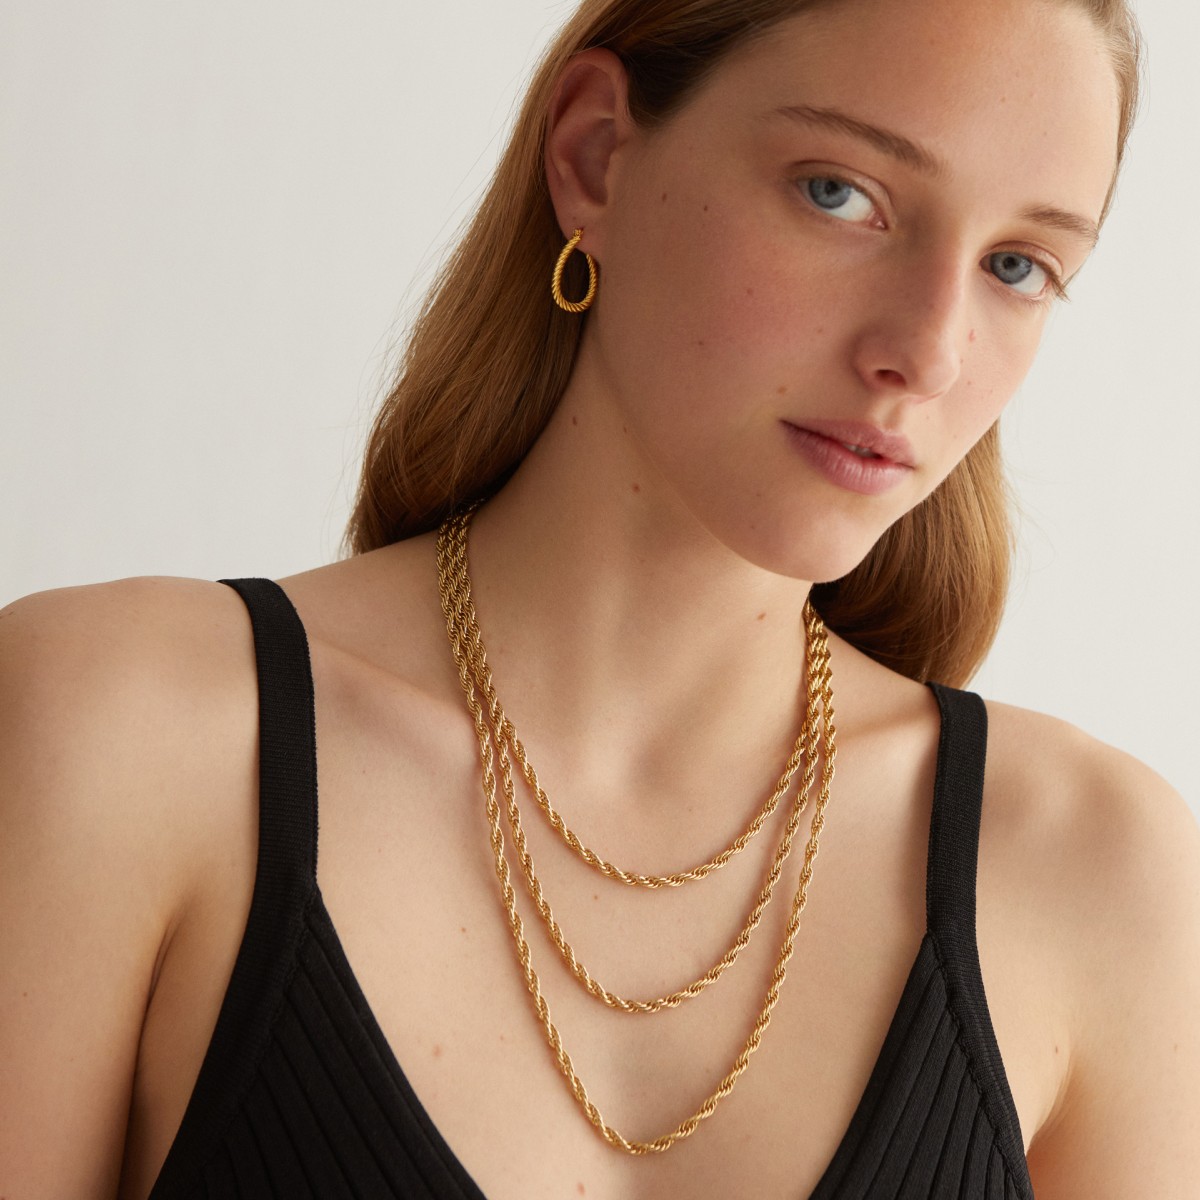 Marguerite Chain Medium - Halsketten - 24k vergoldet